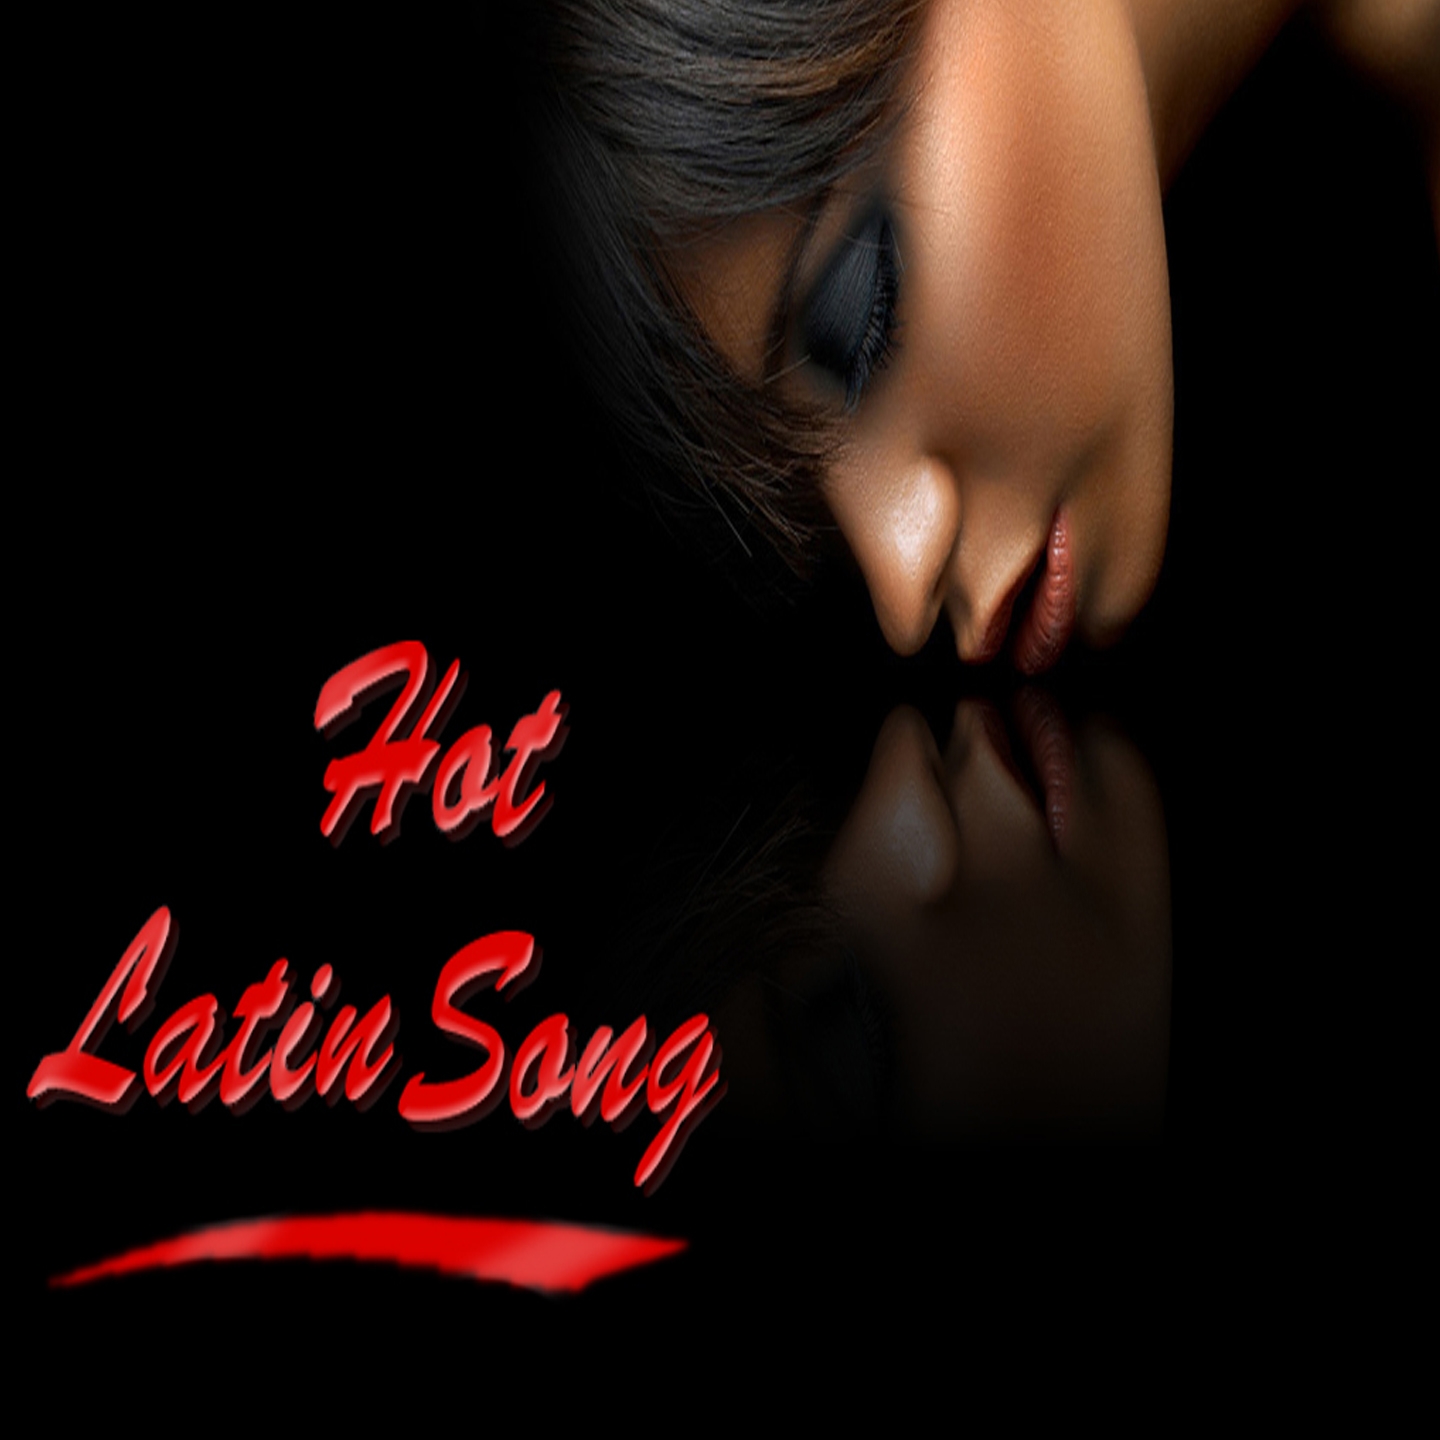 Hot Latin Song